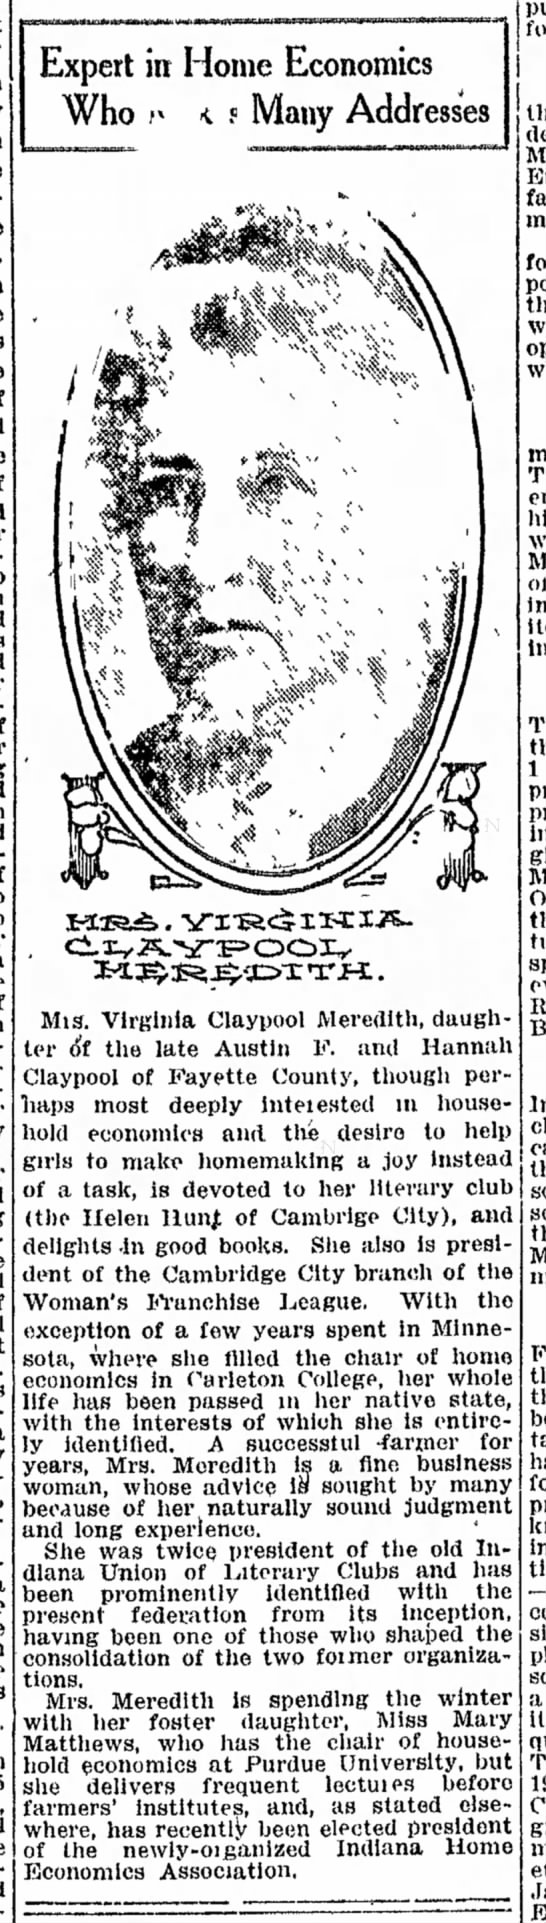 Virginia Claypool Meredith as clubwoman (1913) - 